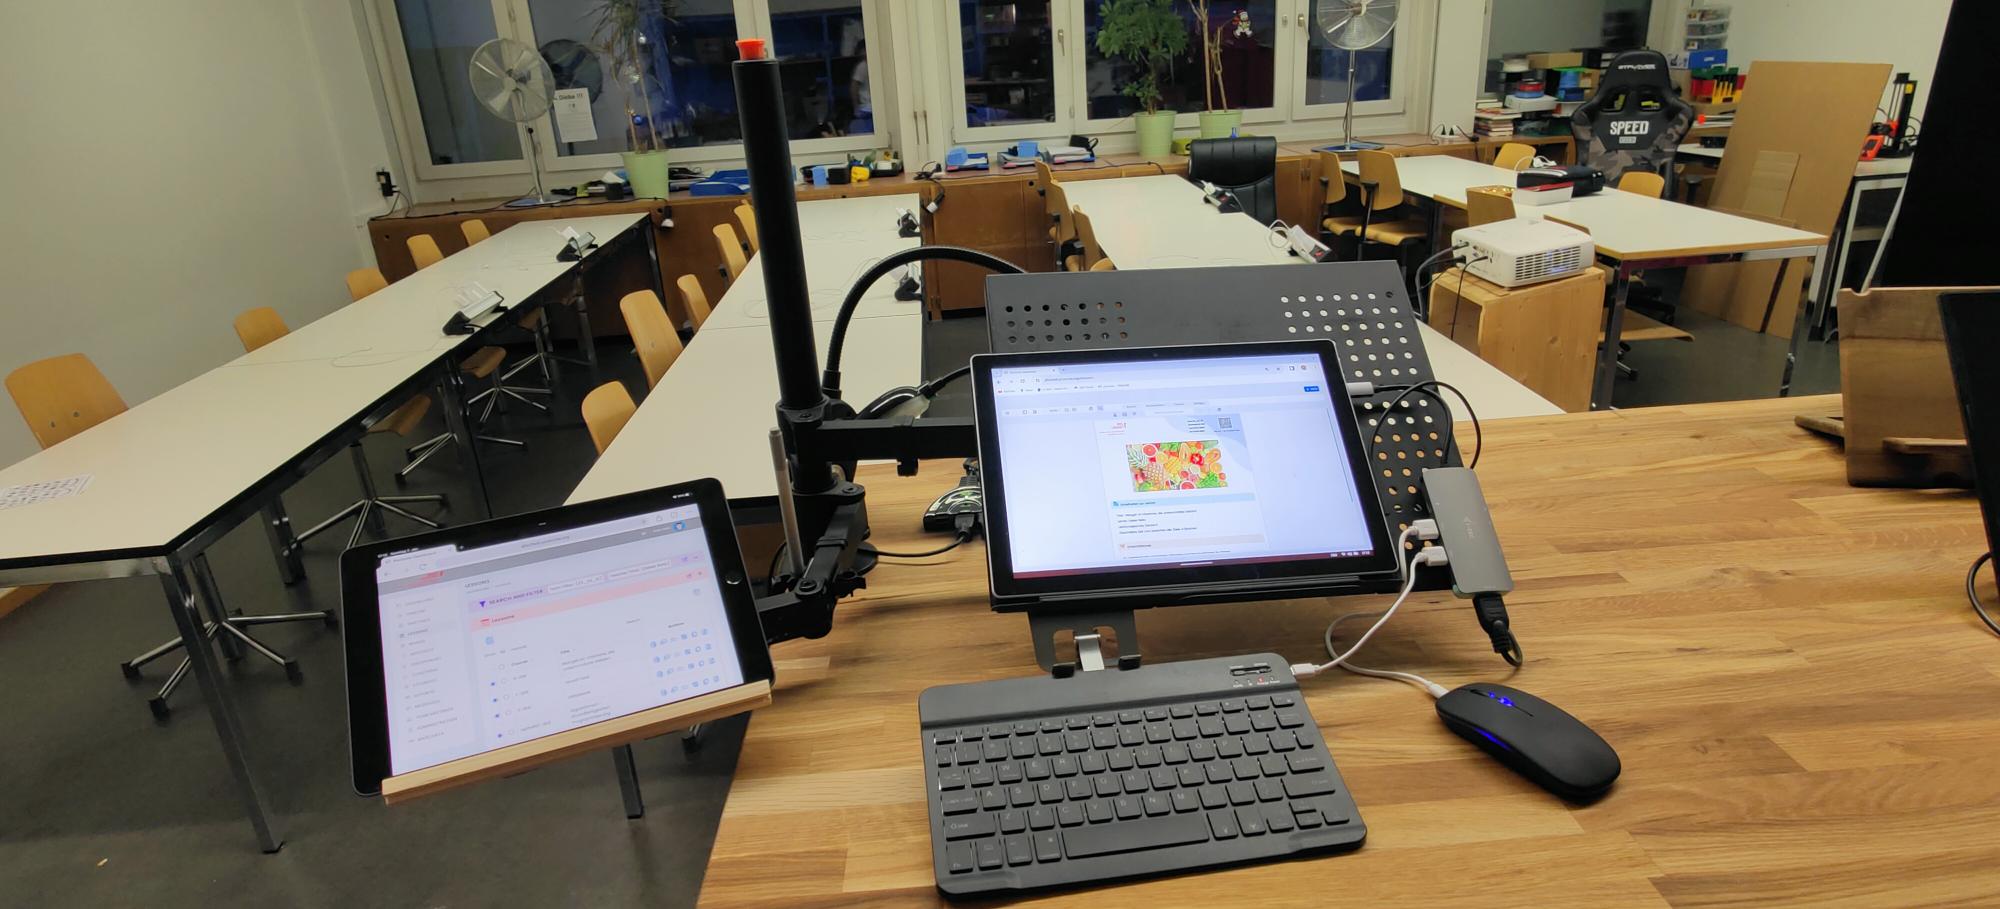 Classroom Digital Teaching setup